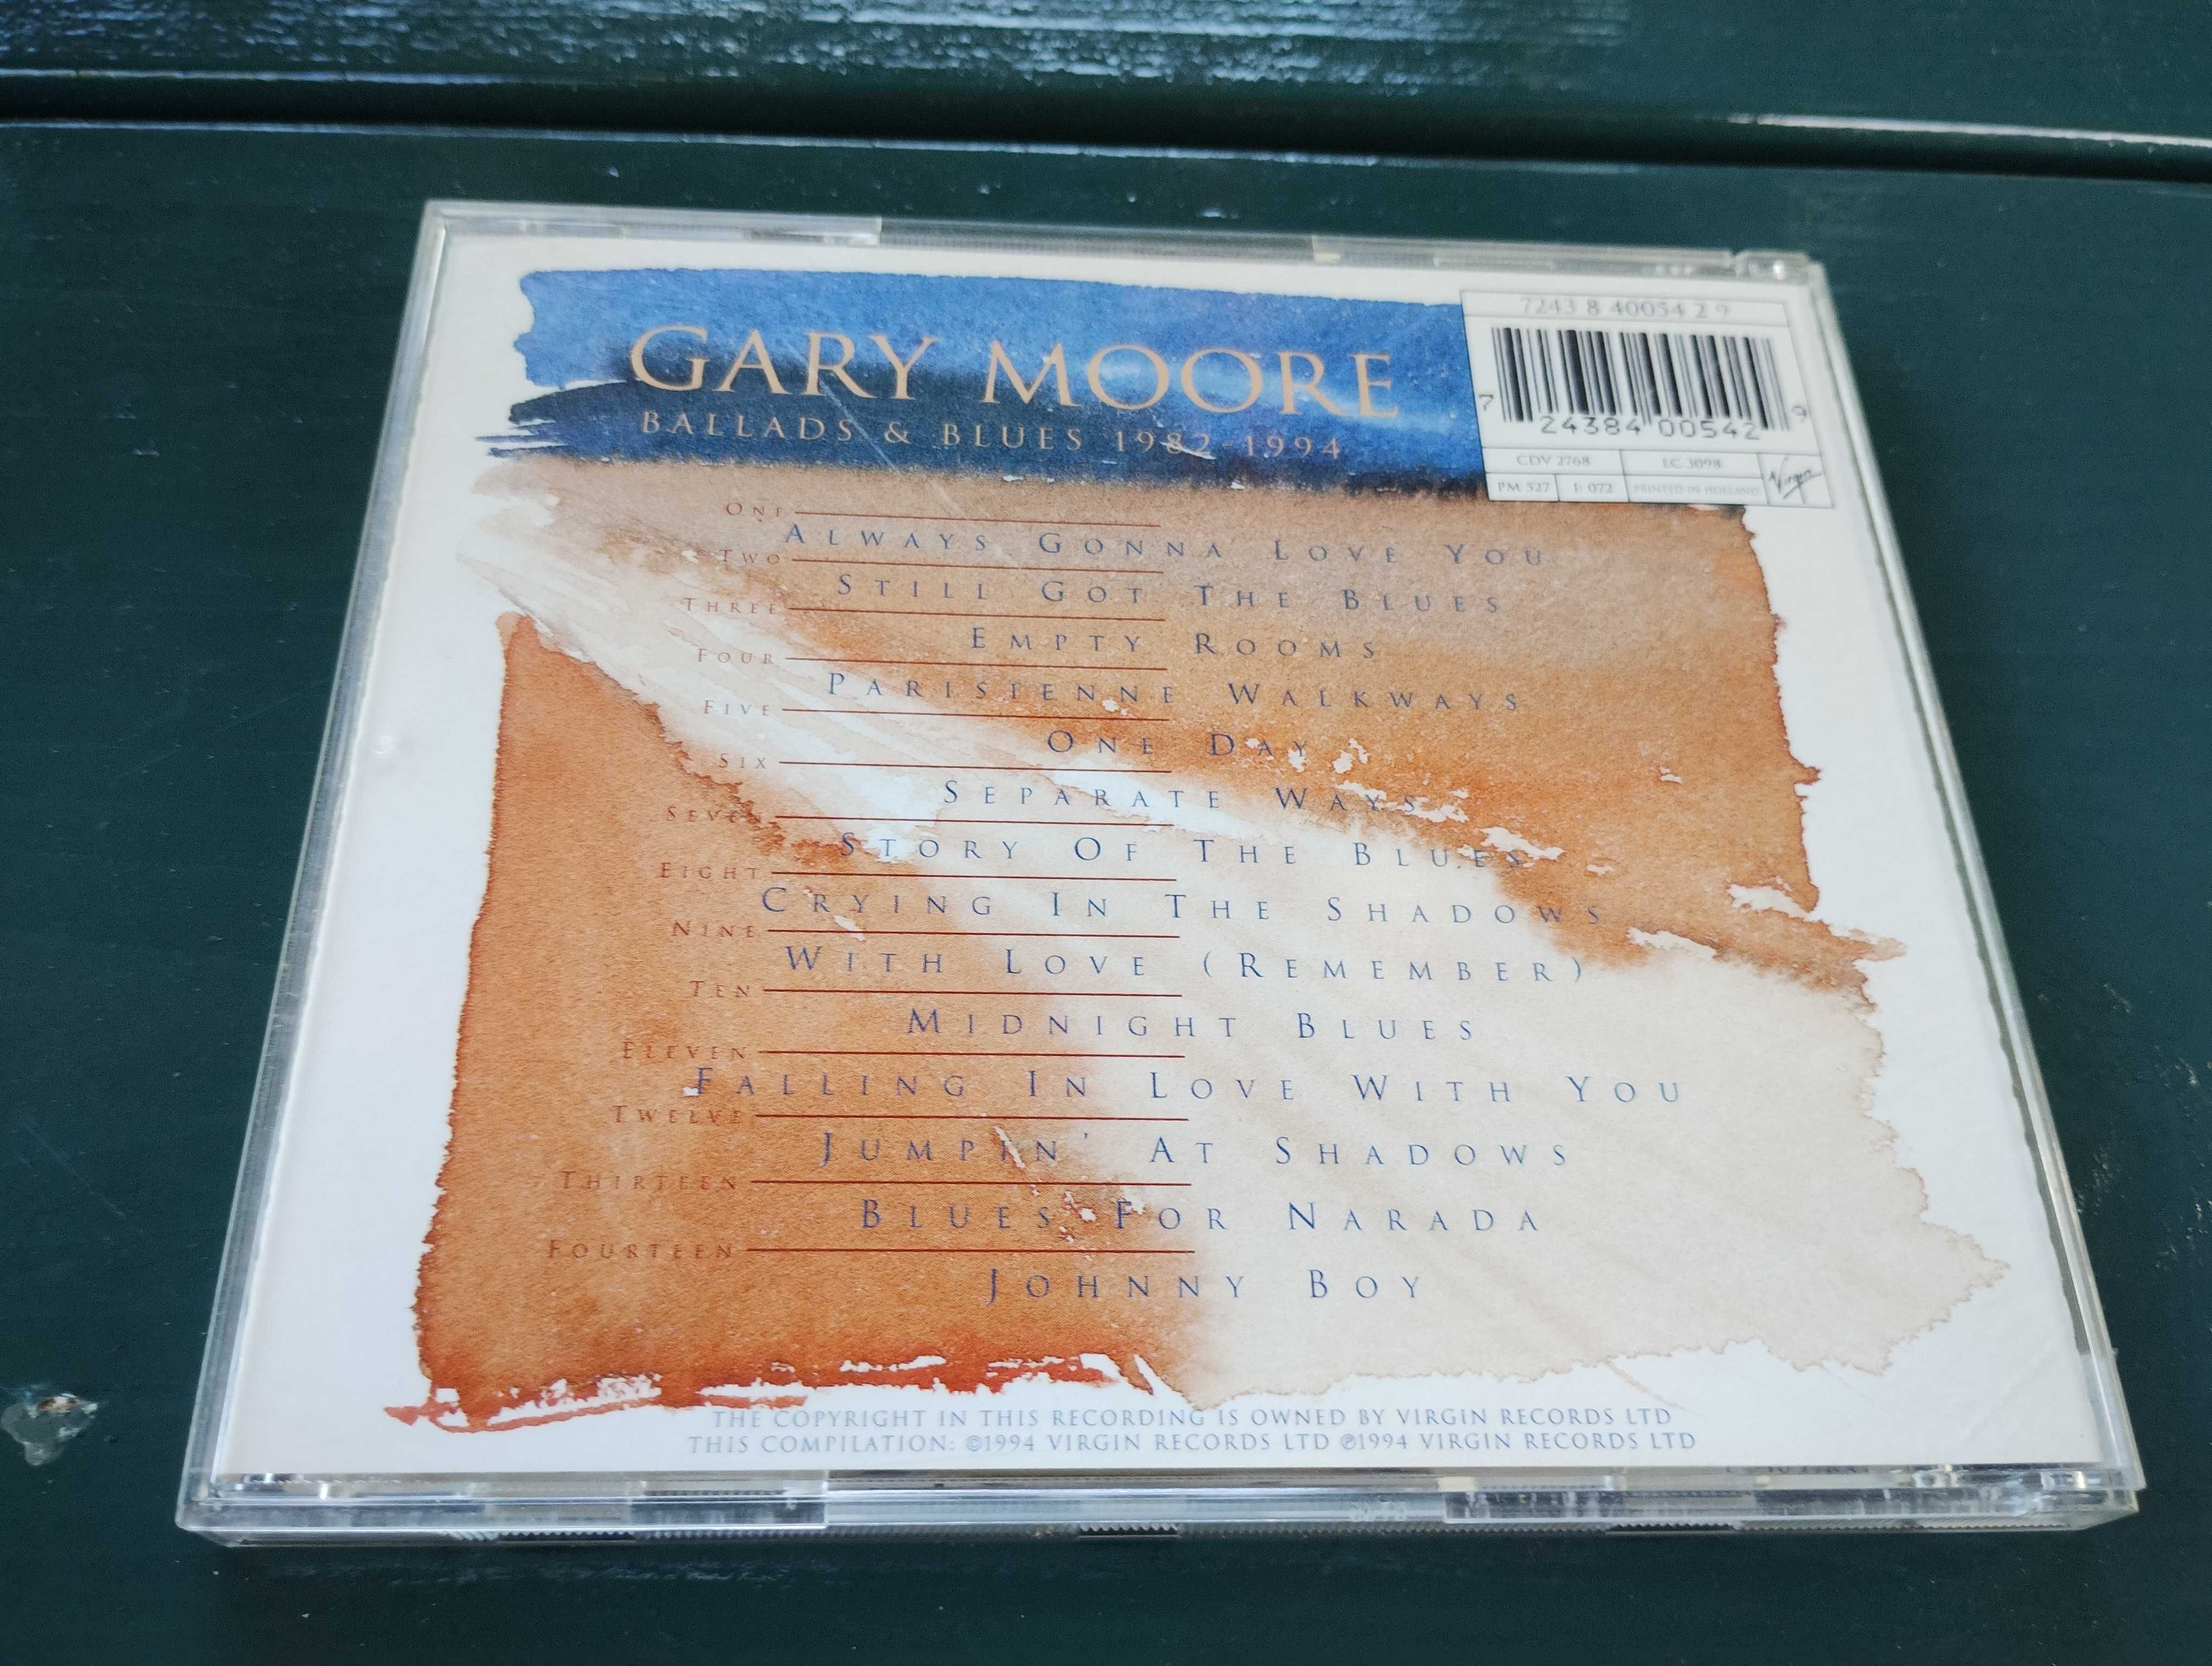 Gary Moore 1982 Ballads & Blues 1994 CD